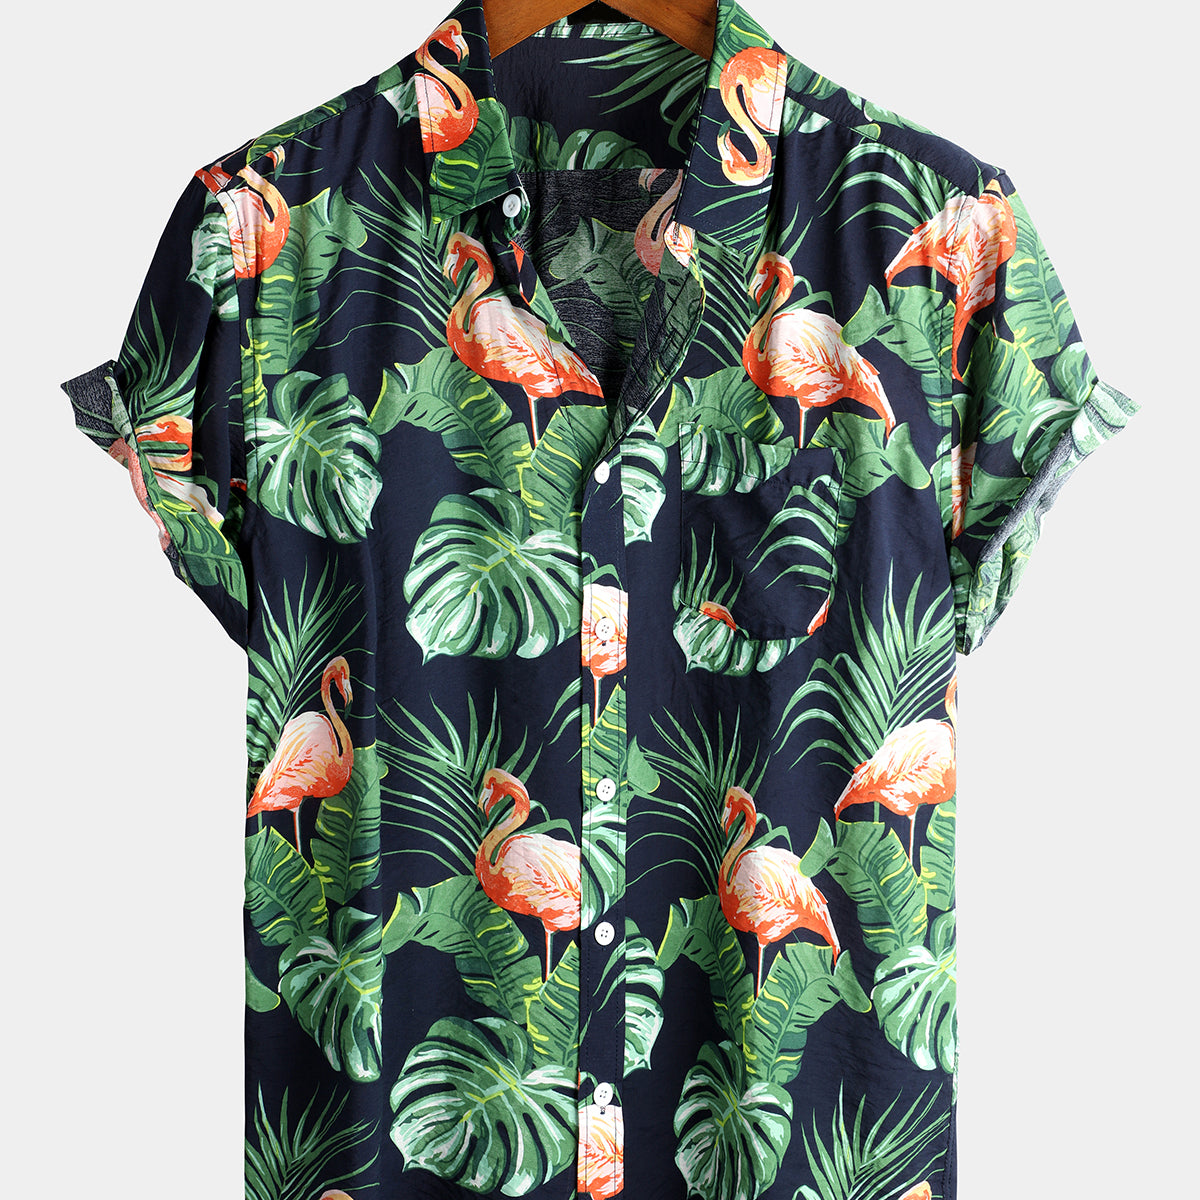 Men's Holiday Short Sleeve Cotton Tropical Flamingo Shirt